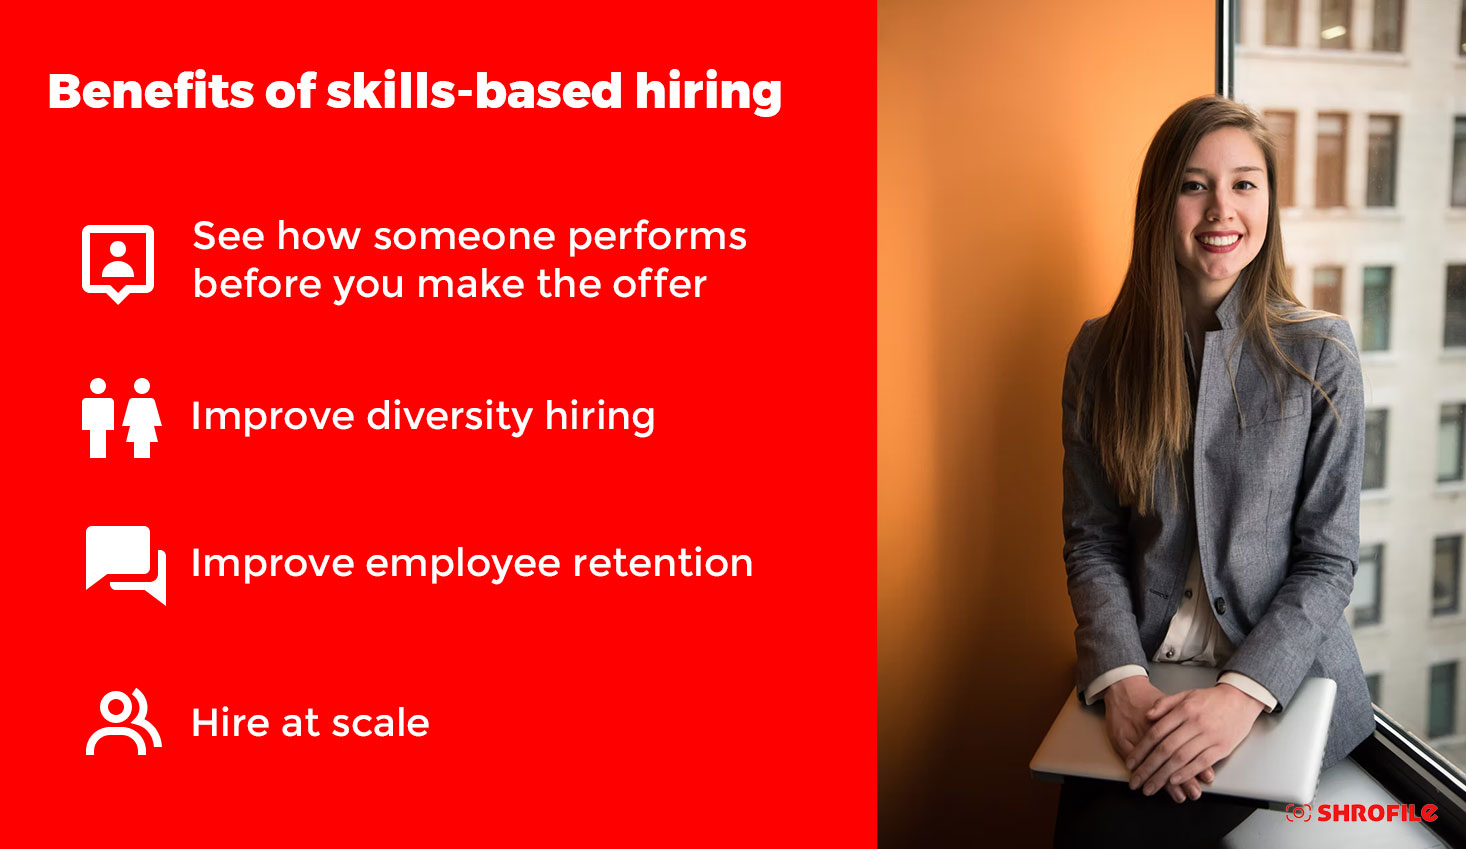 Benefits of skills-based hiring